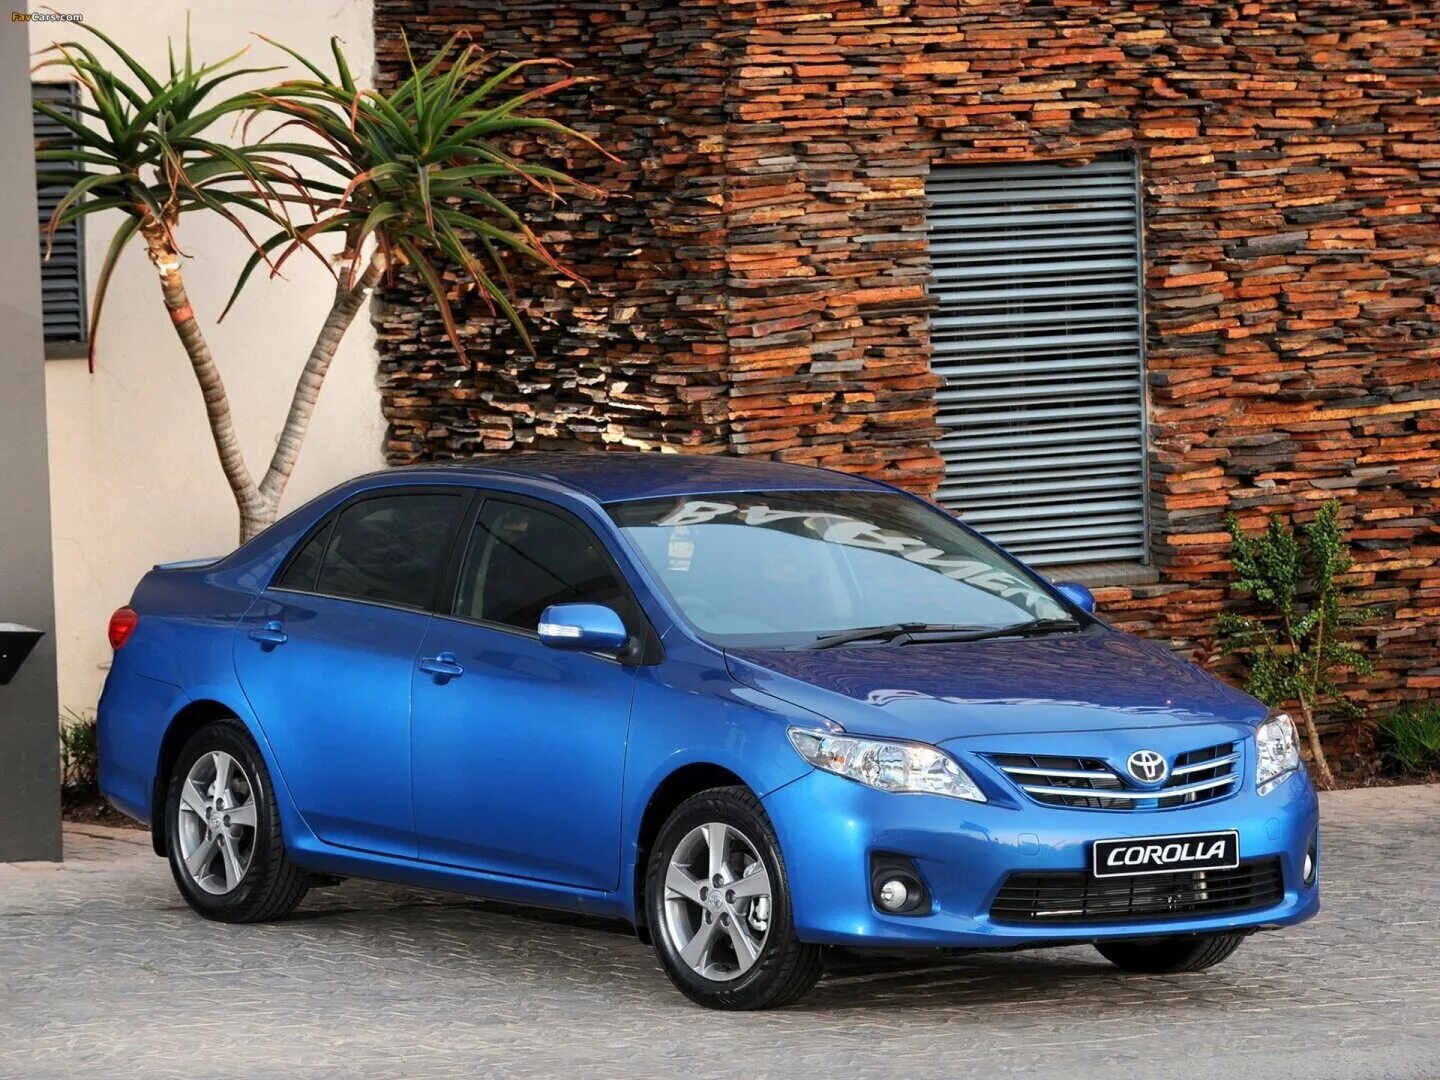 Правда ли что тойота возвращается. Toyota Corolla 2010. Тойота Королла Toyota Corolla. Toyota Corolla 2013 Blue. Тойота Королла 2013 синяя.